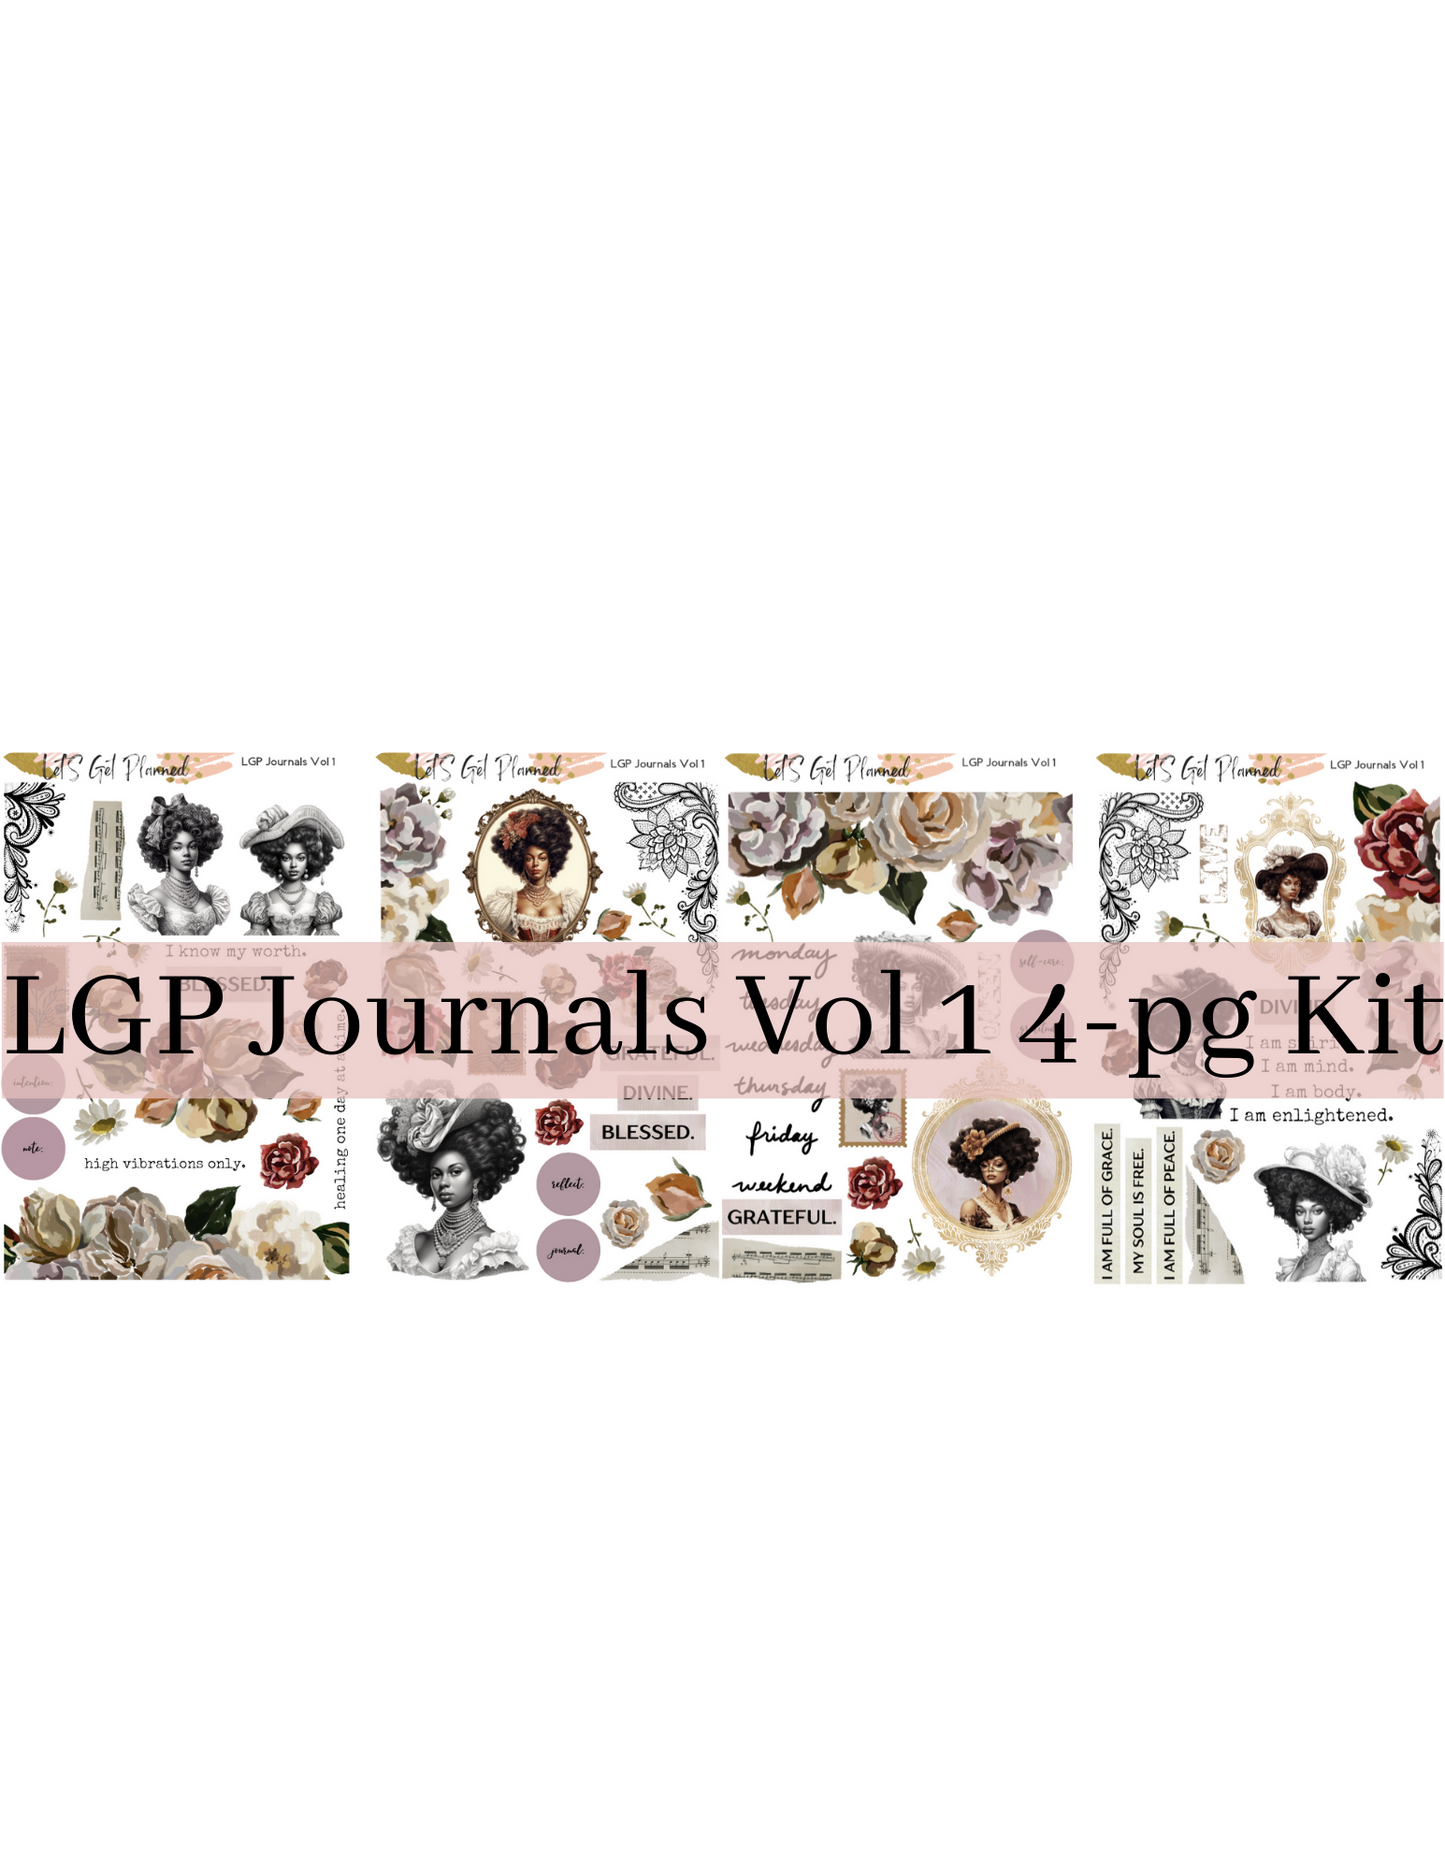 LGP Journals Vol 1 4-pg Kit